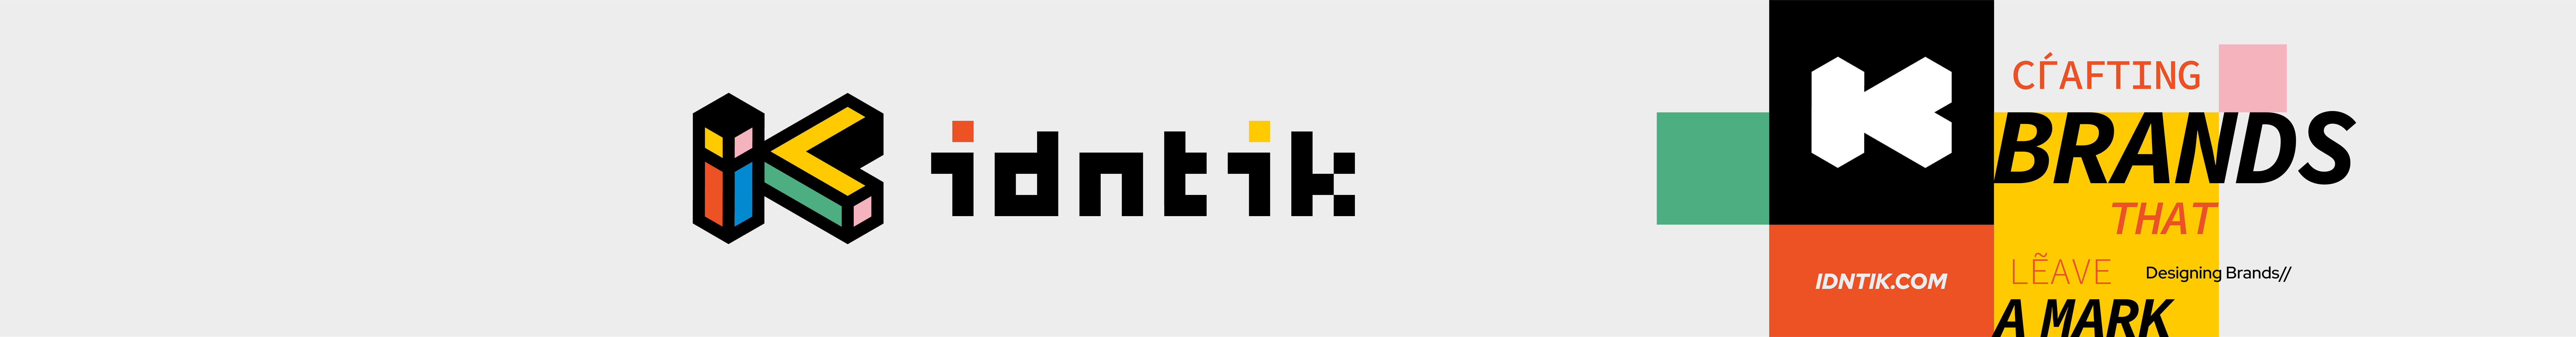 Idntik Design ®'s profile banner